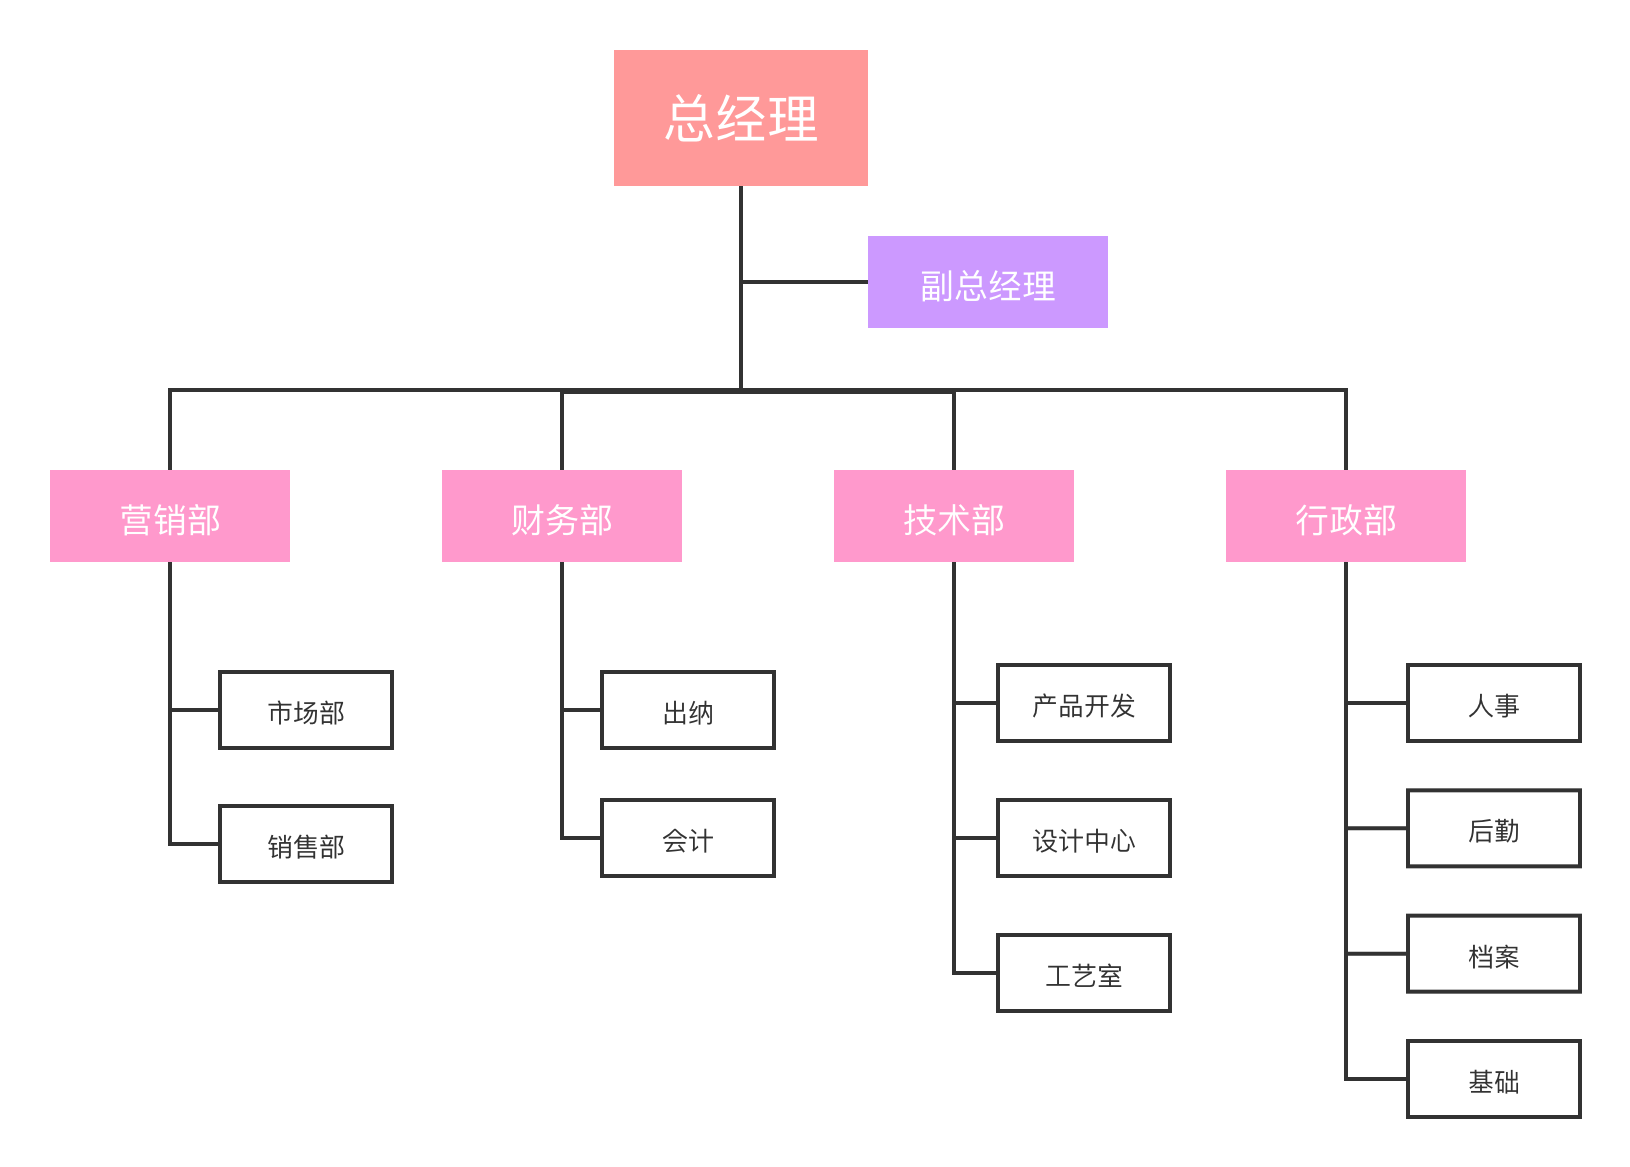 公司组织结构图.png